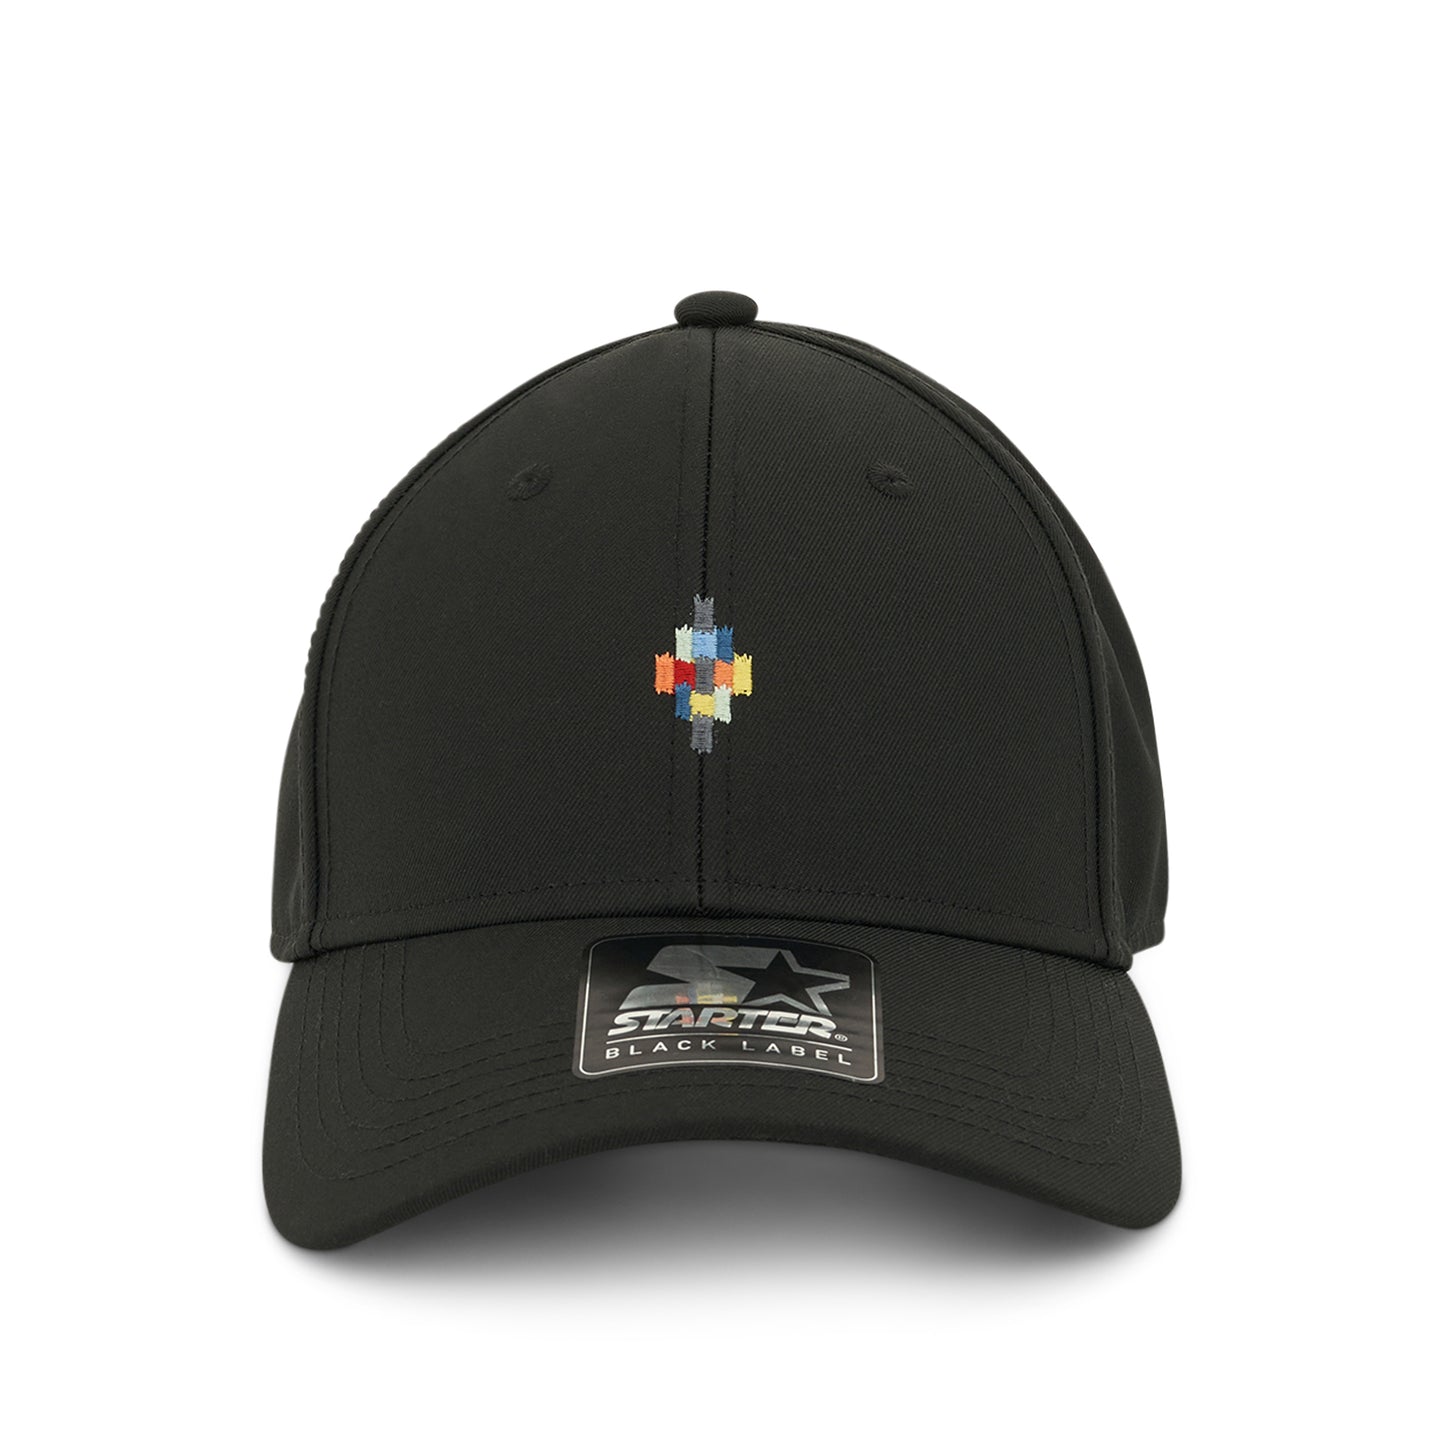 Colourful Cross Baseball Cap in Black